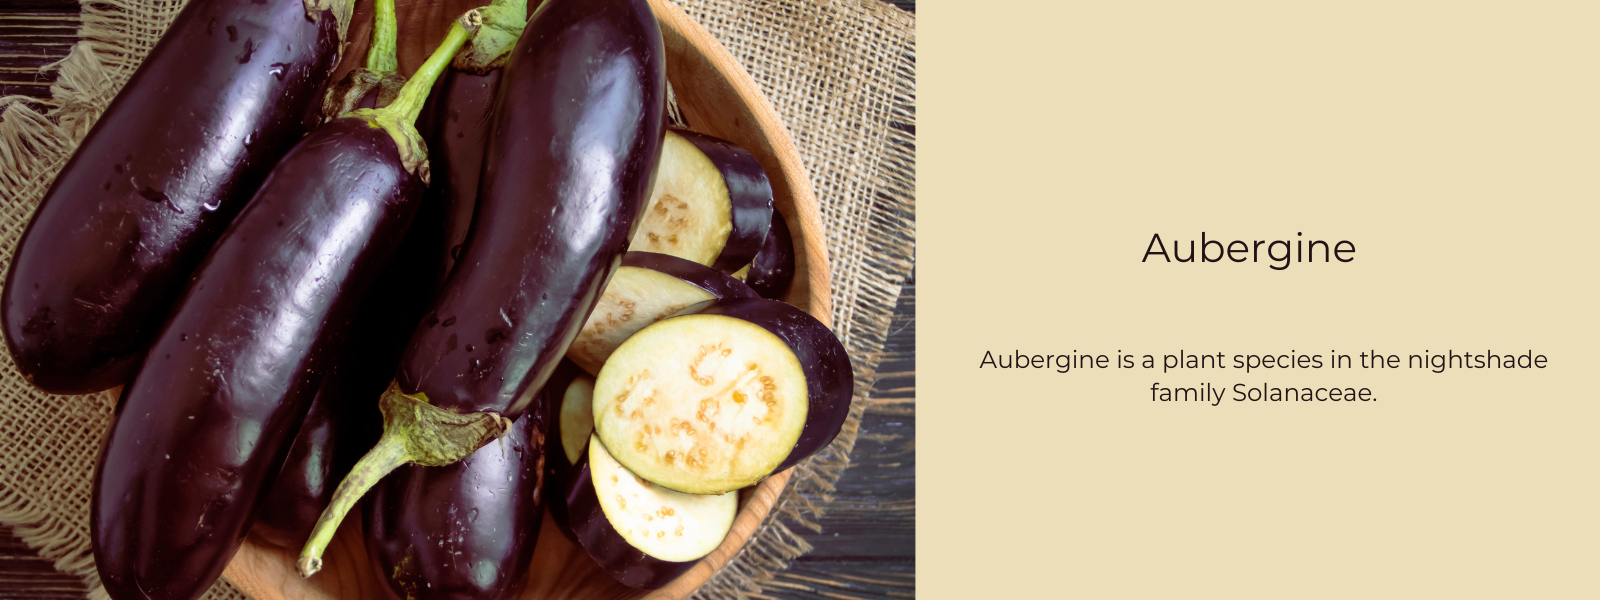 The health benefits of aubergines